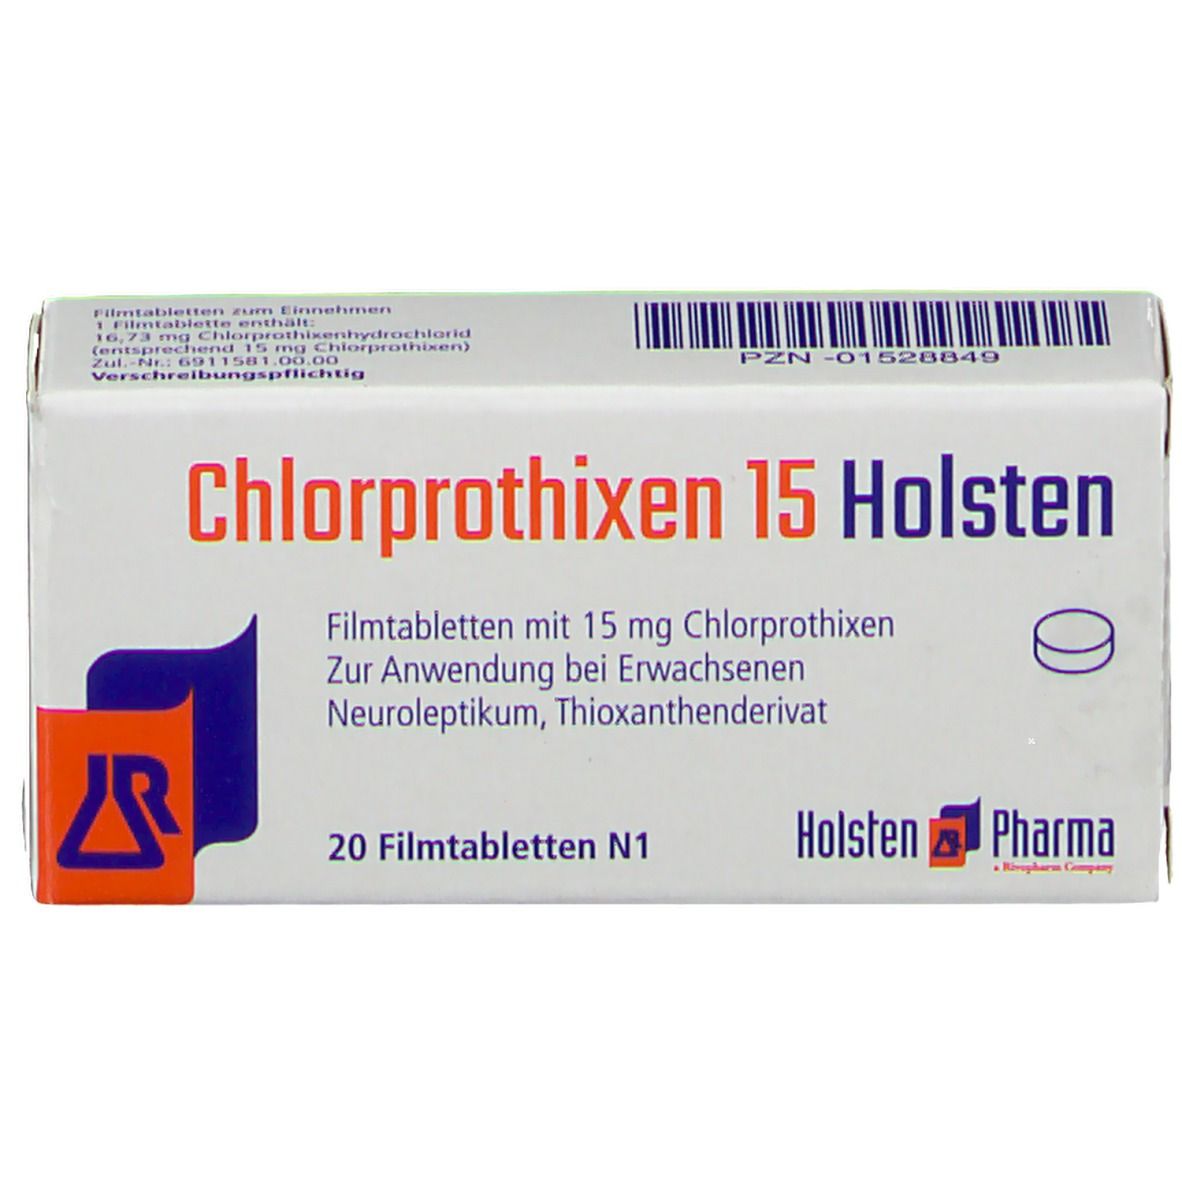 Chlorprothixen 15 Holsten